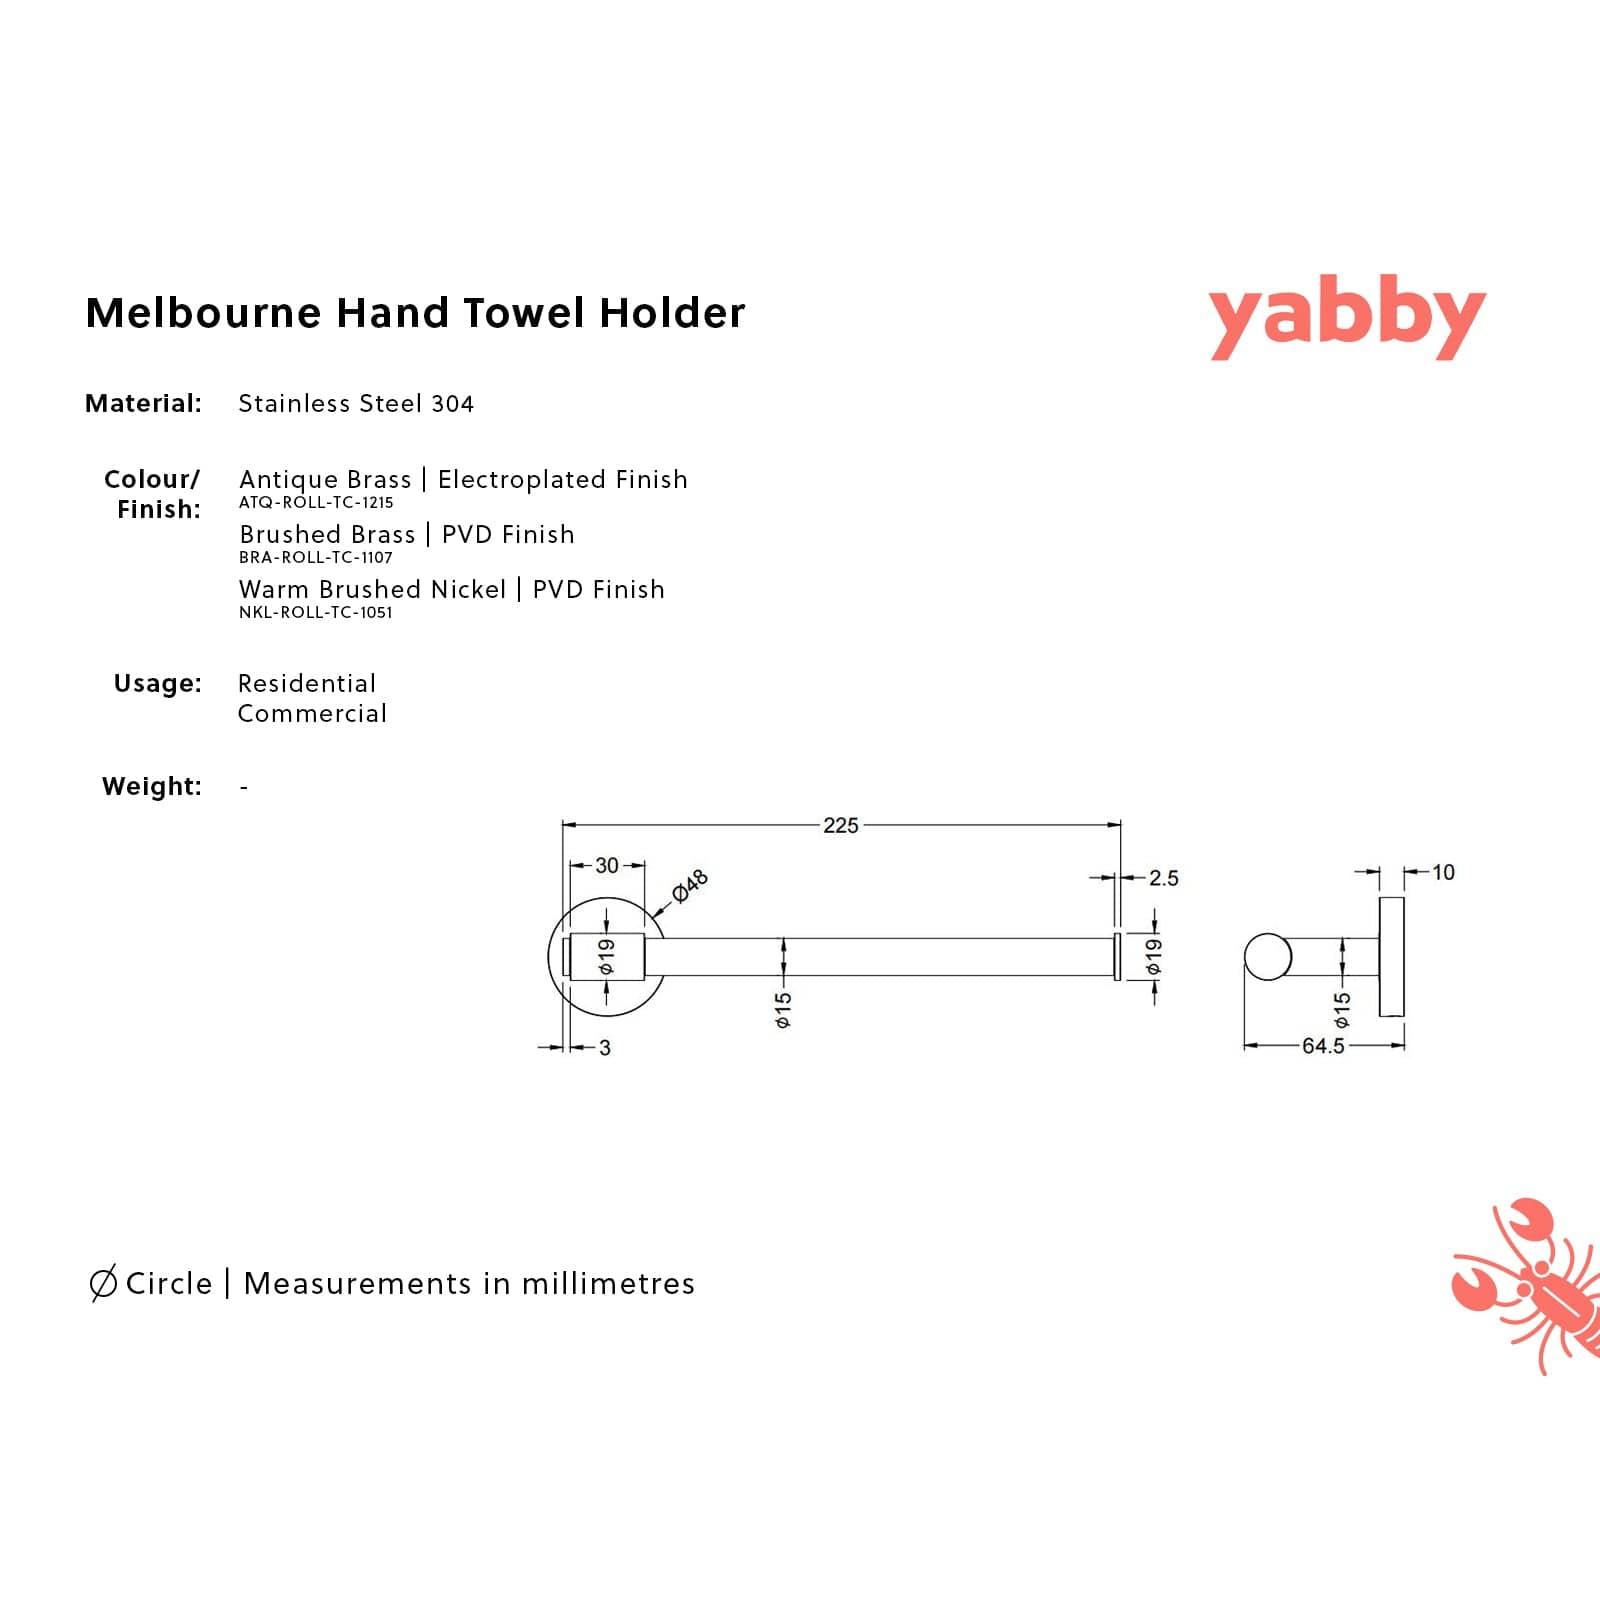 TileCloud TAPWARE Melbourne Hand Towel Holder Antique Brass